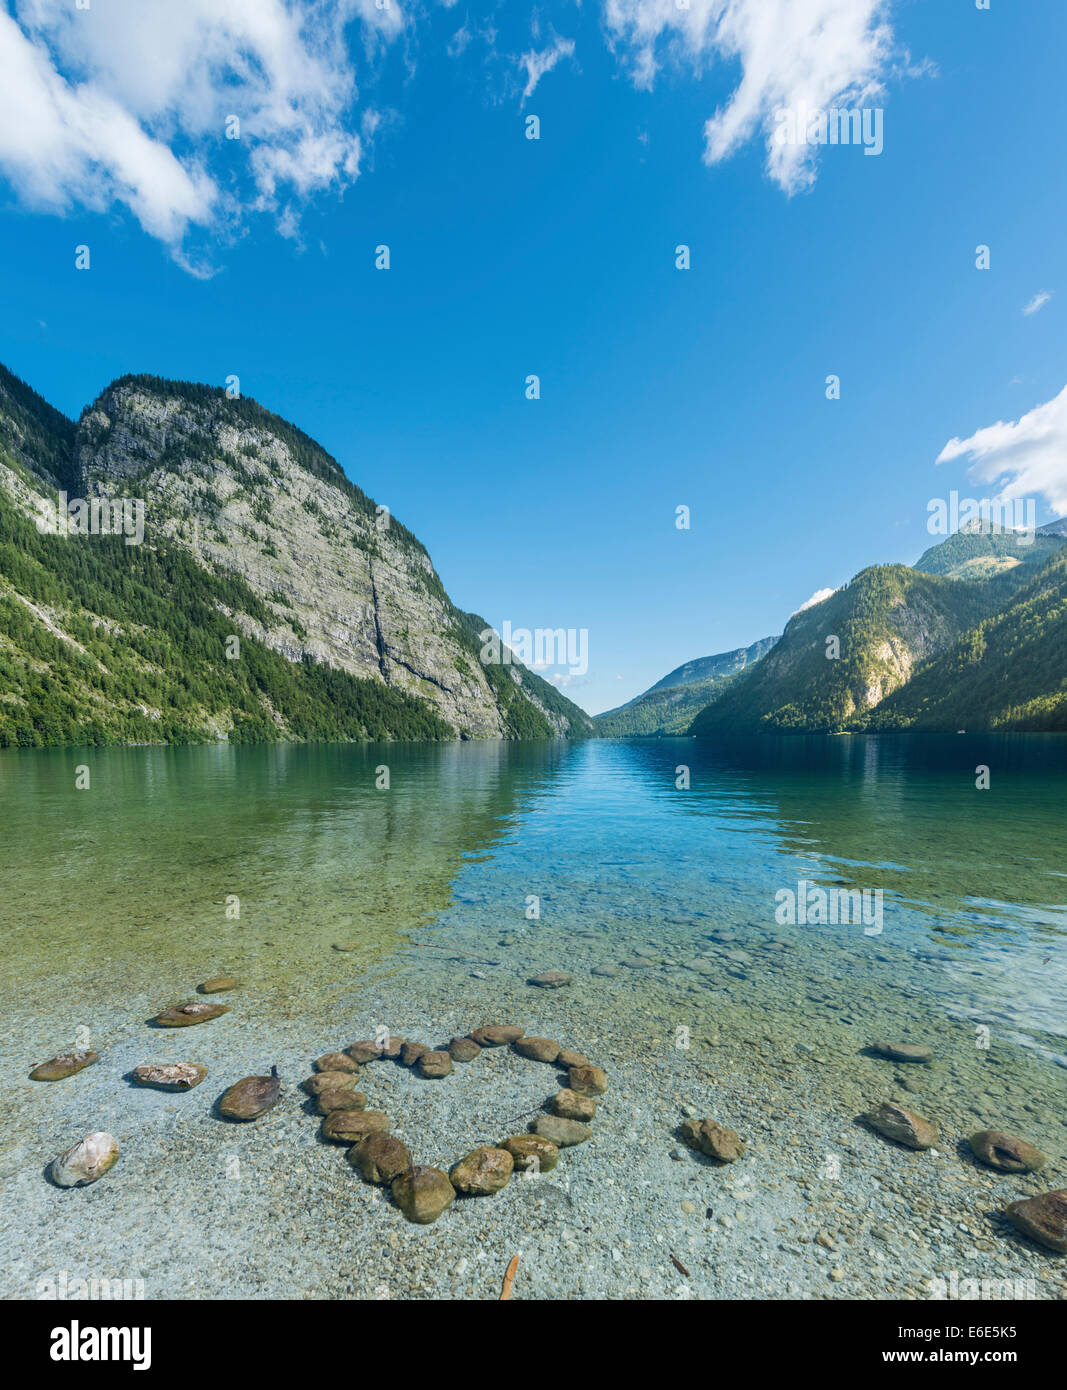 Heart of stones in water, view over Lake Königssee, Berchtesgaden National Park, Berchtesgadener Land district, Upper Bavaria Stock Photo